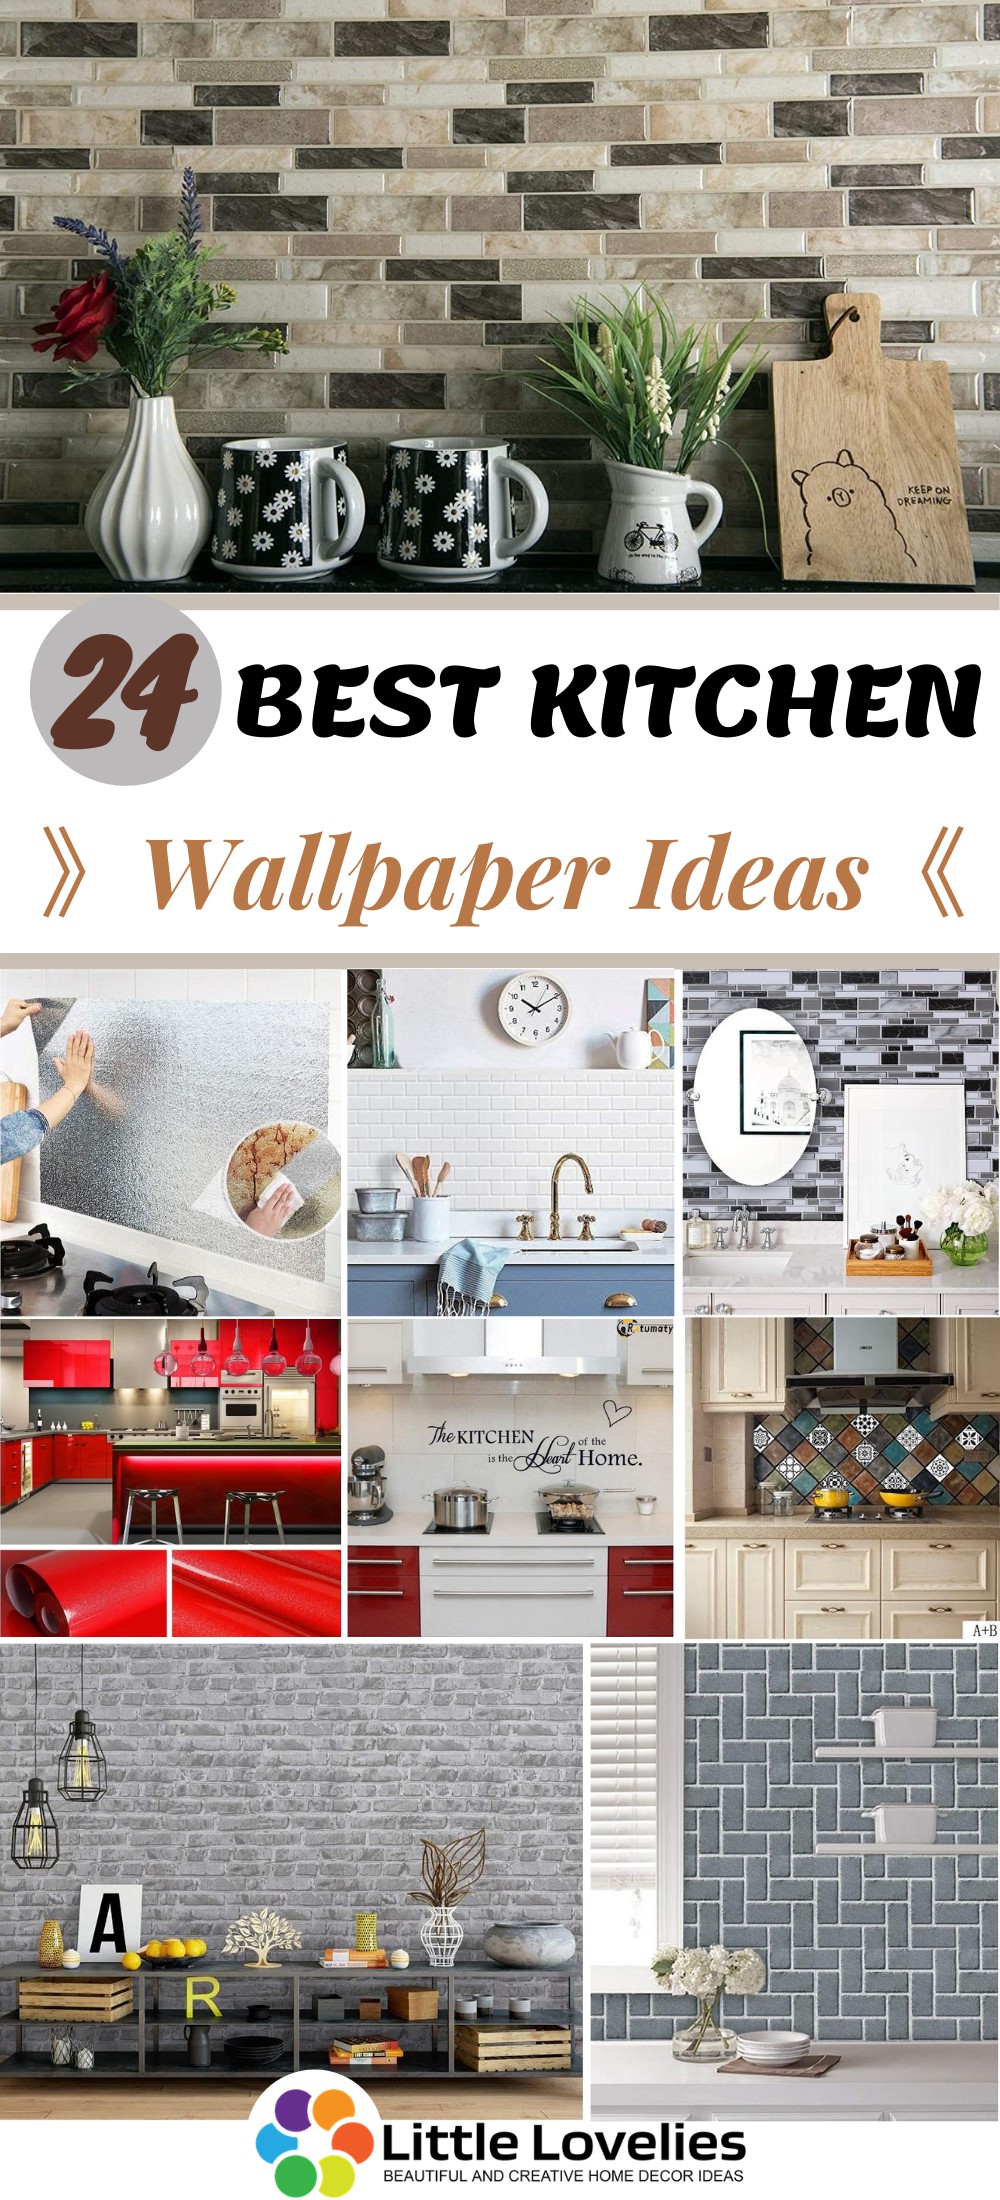 18 Kitchen Wallpaper Ideas To Make It Look Thrice As Elegan